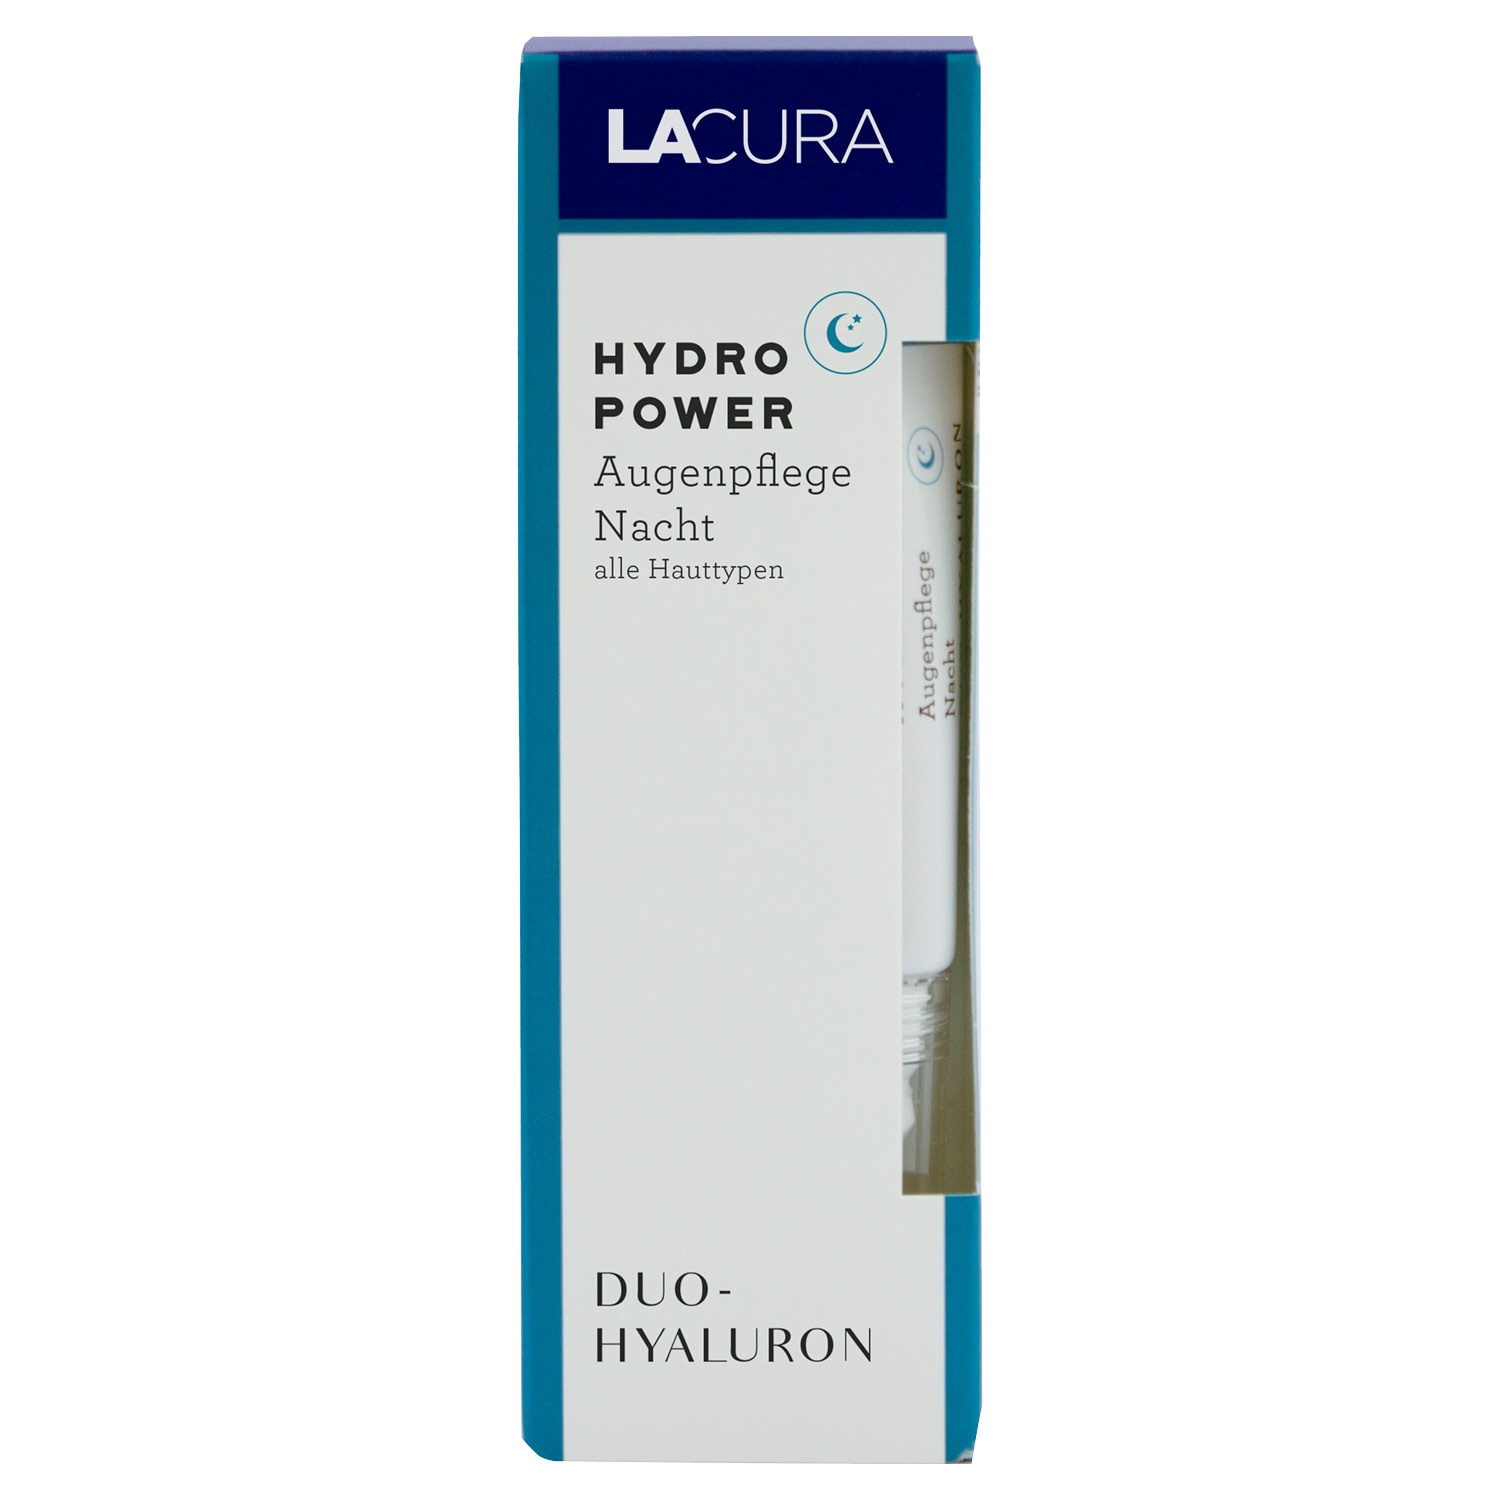 LACURA Hydro Power Augenpflege mit Duo-Hyaluron